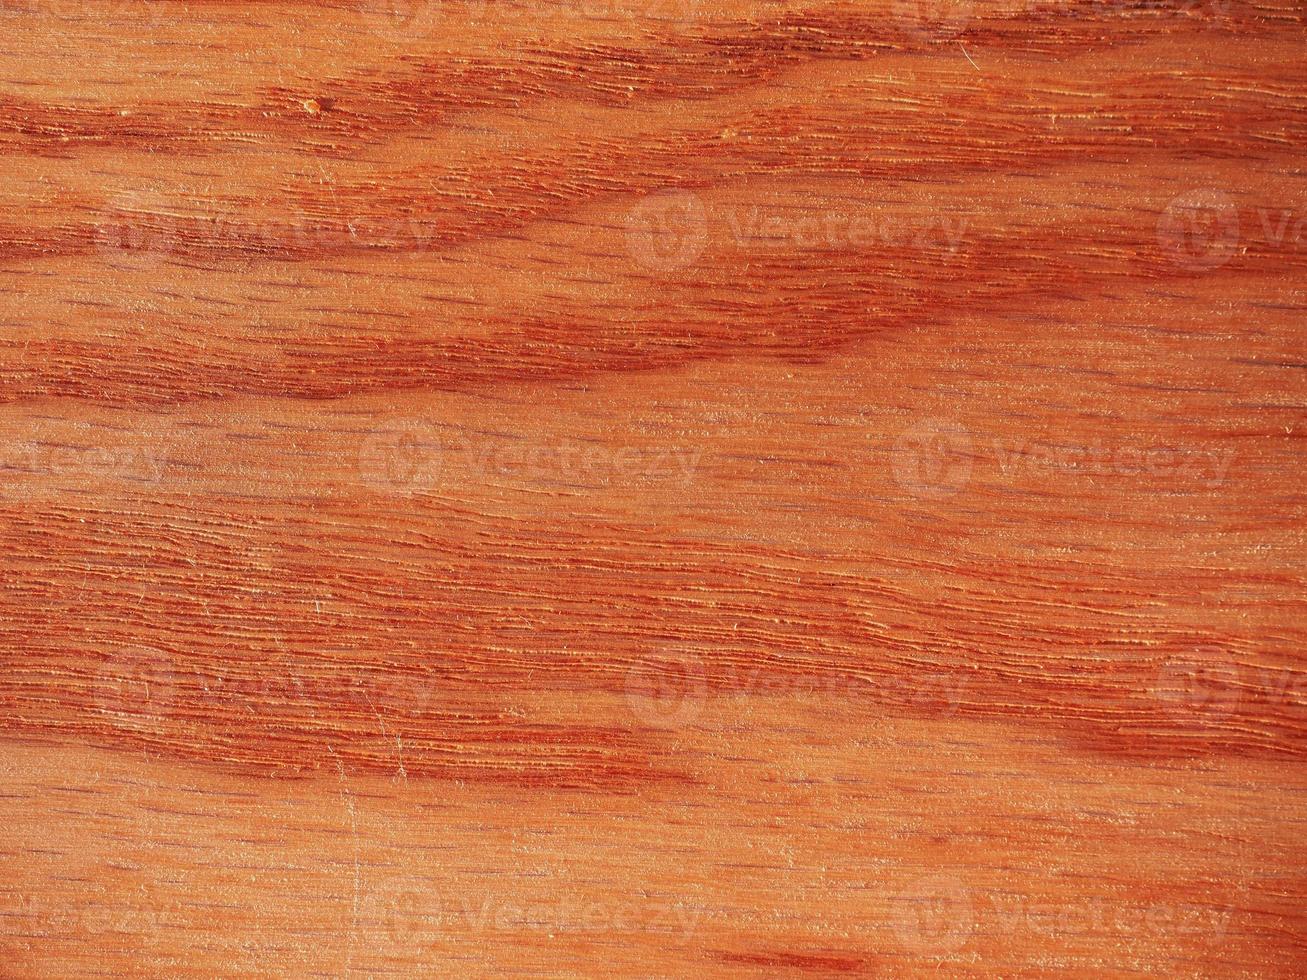 Red oak wood background photo